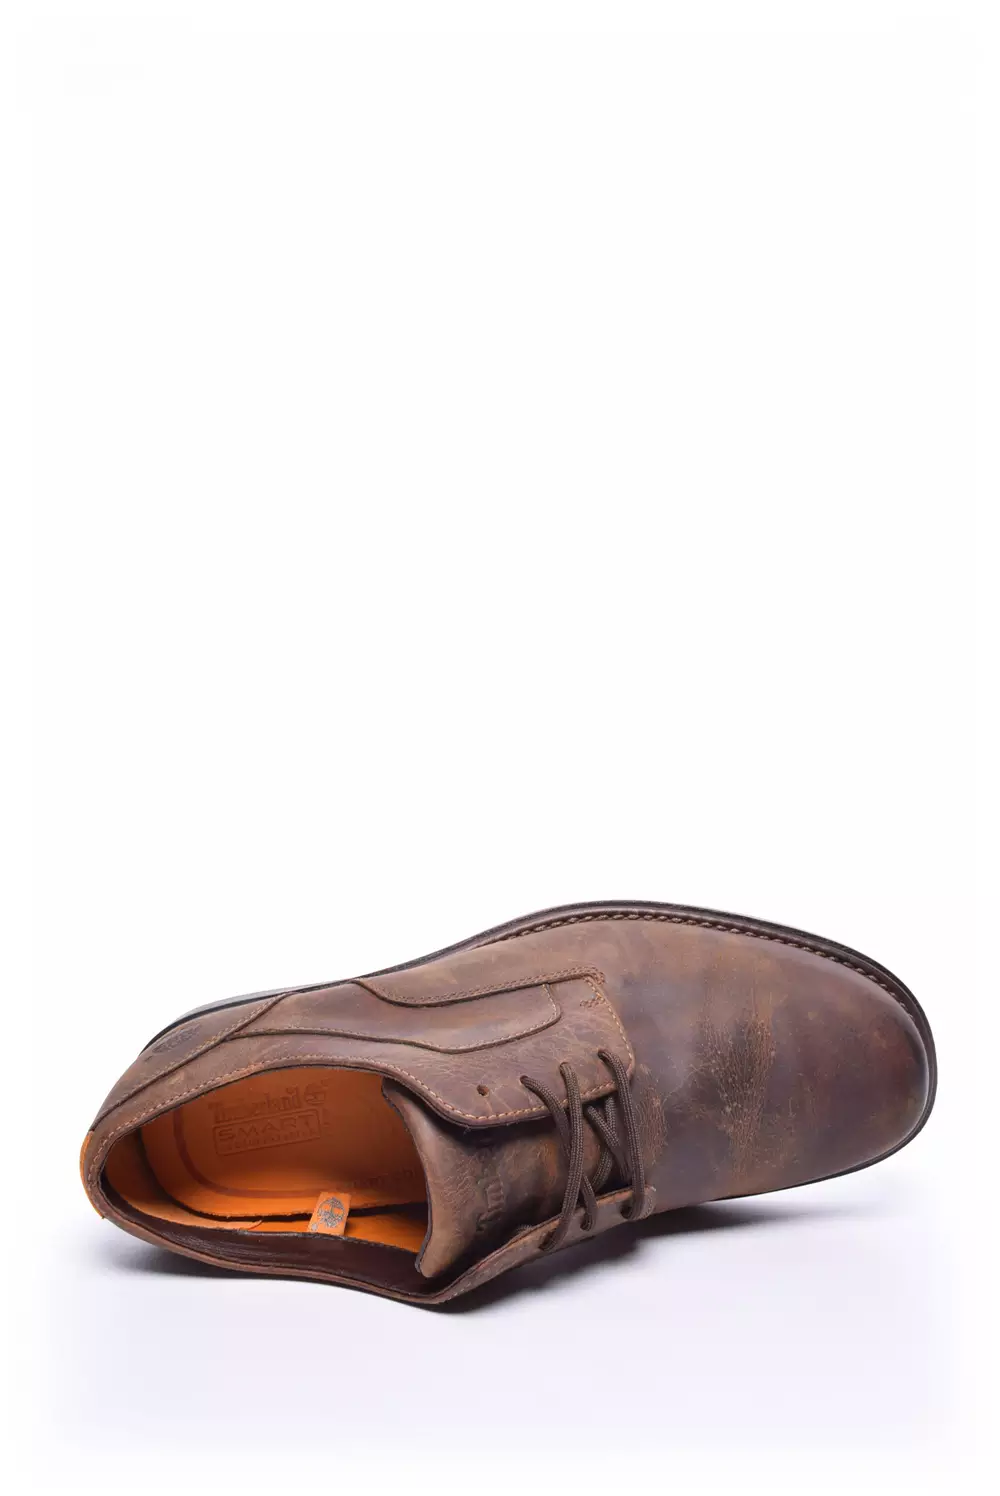 Pantofi barbati impermeabili cu aspect vintage [4]